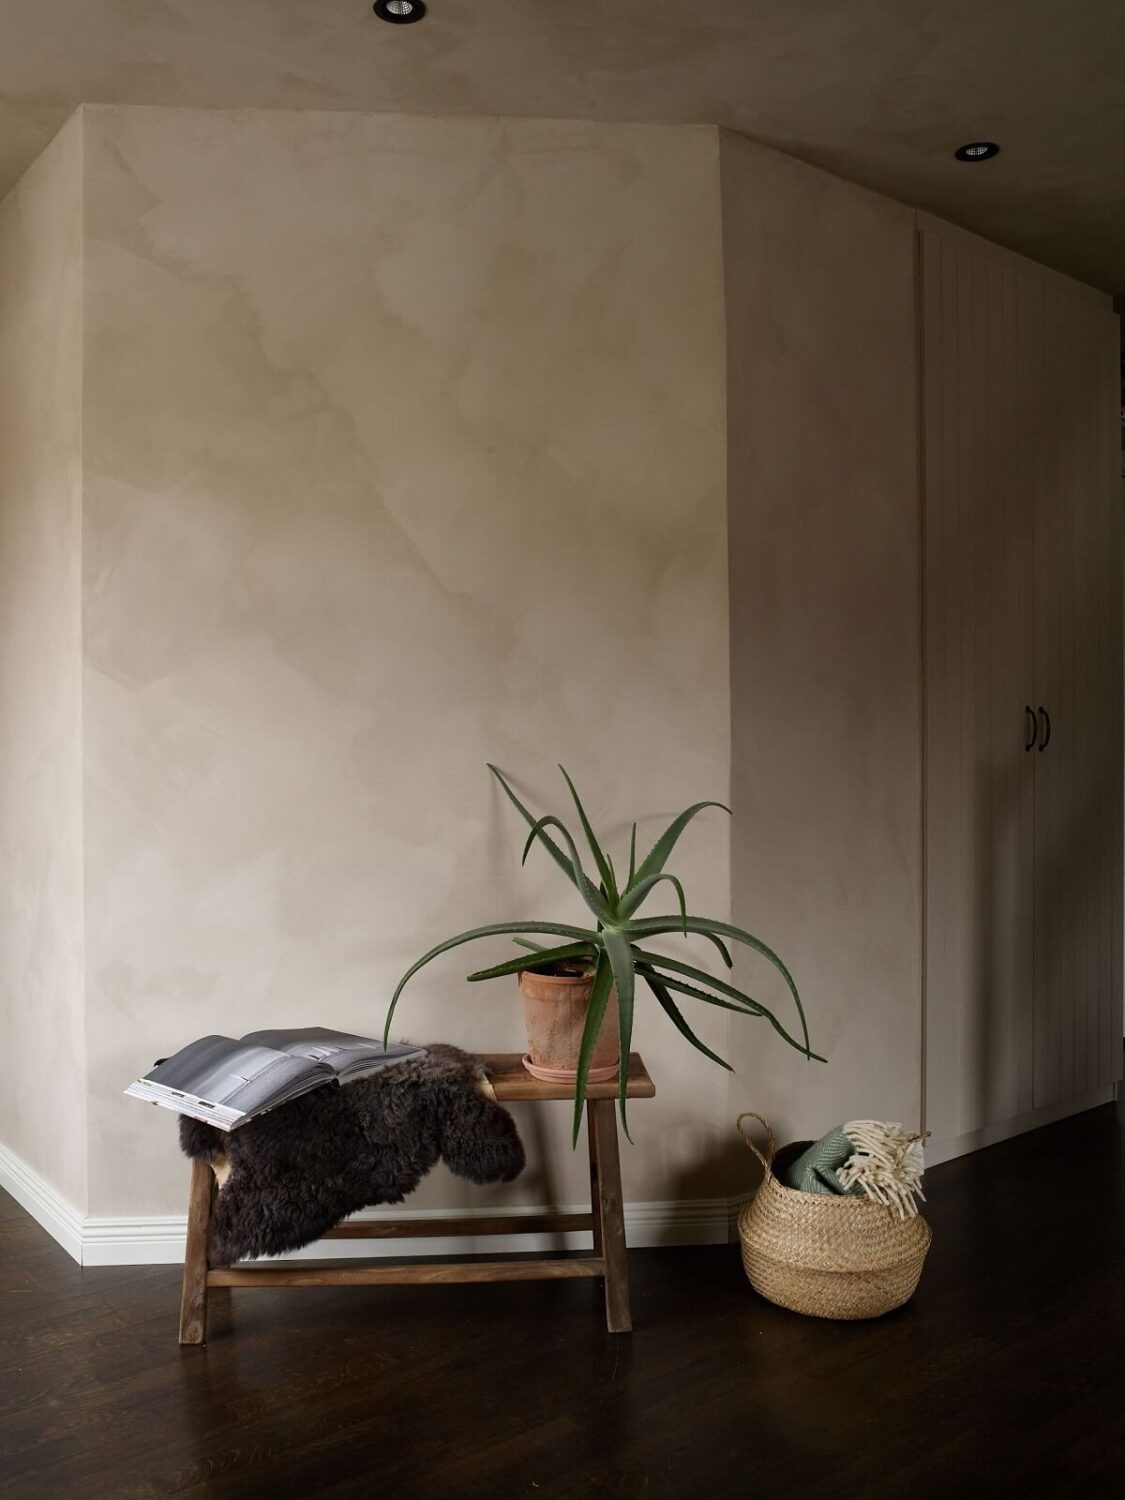 hallway-chalkpaint-walls-jotun-sand-built-in-cabinets-nordroom